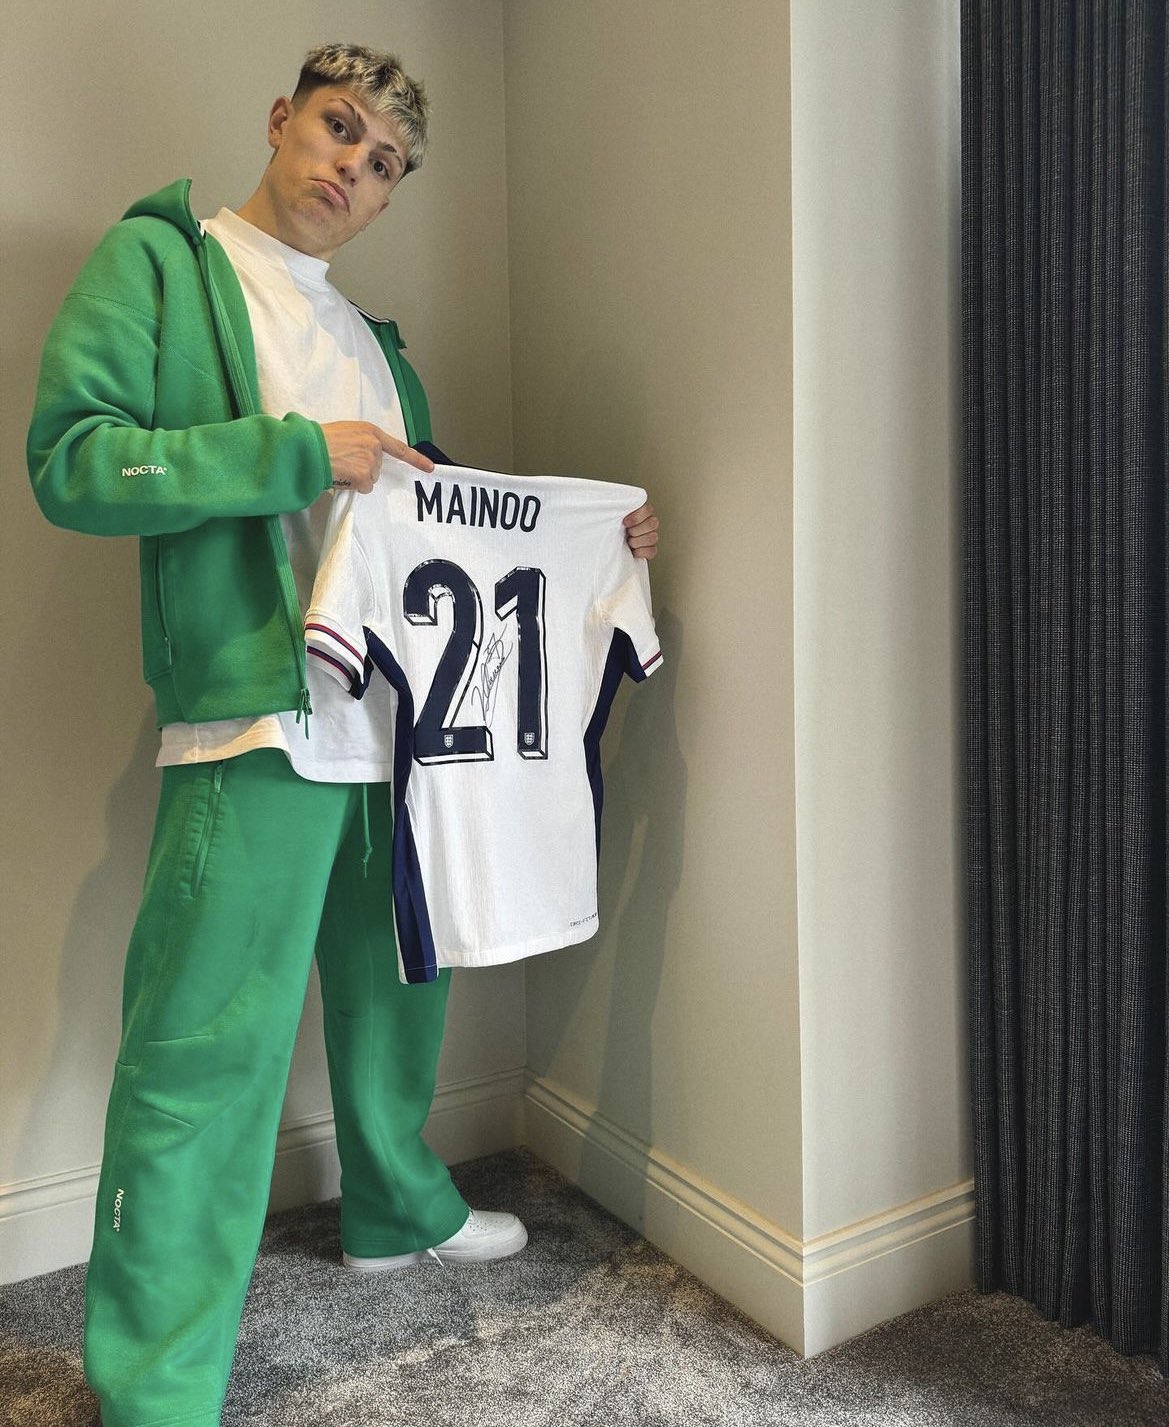 UtdDistrict on X: "Alejandro Garnacho and Kobbie Mainoo gifting each other  international shirts  https://t.co/D5bbrONvJ1" / X